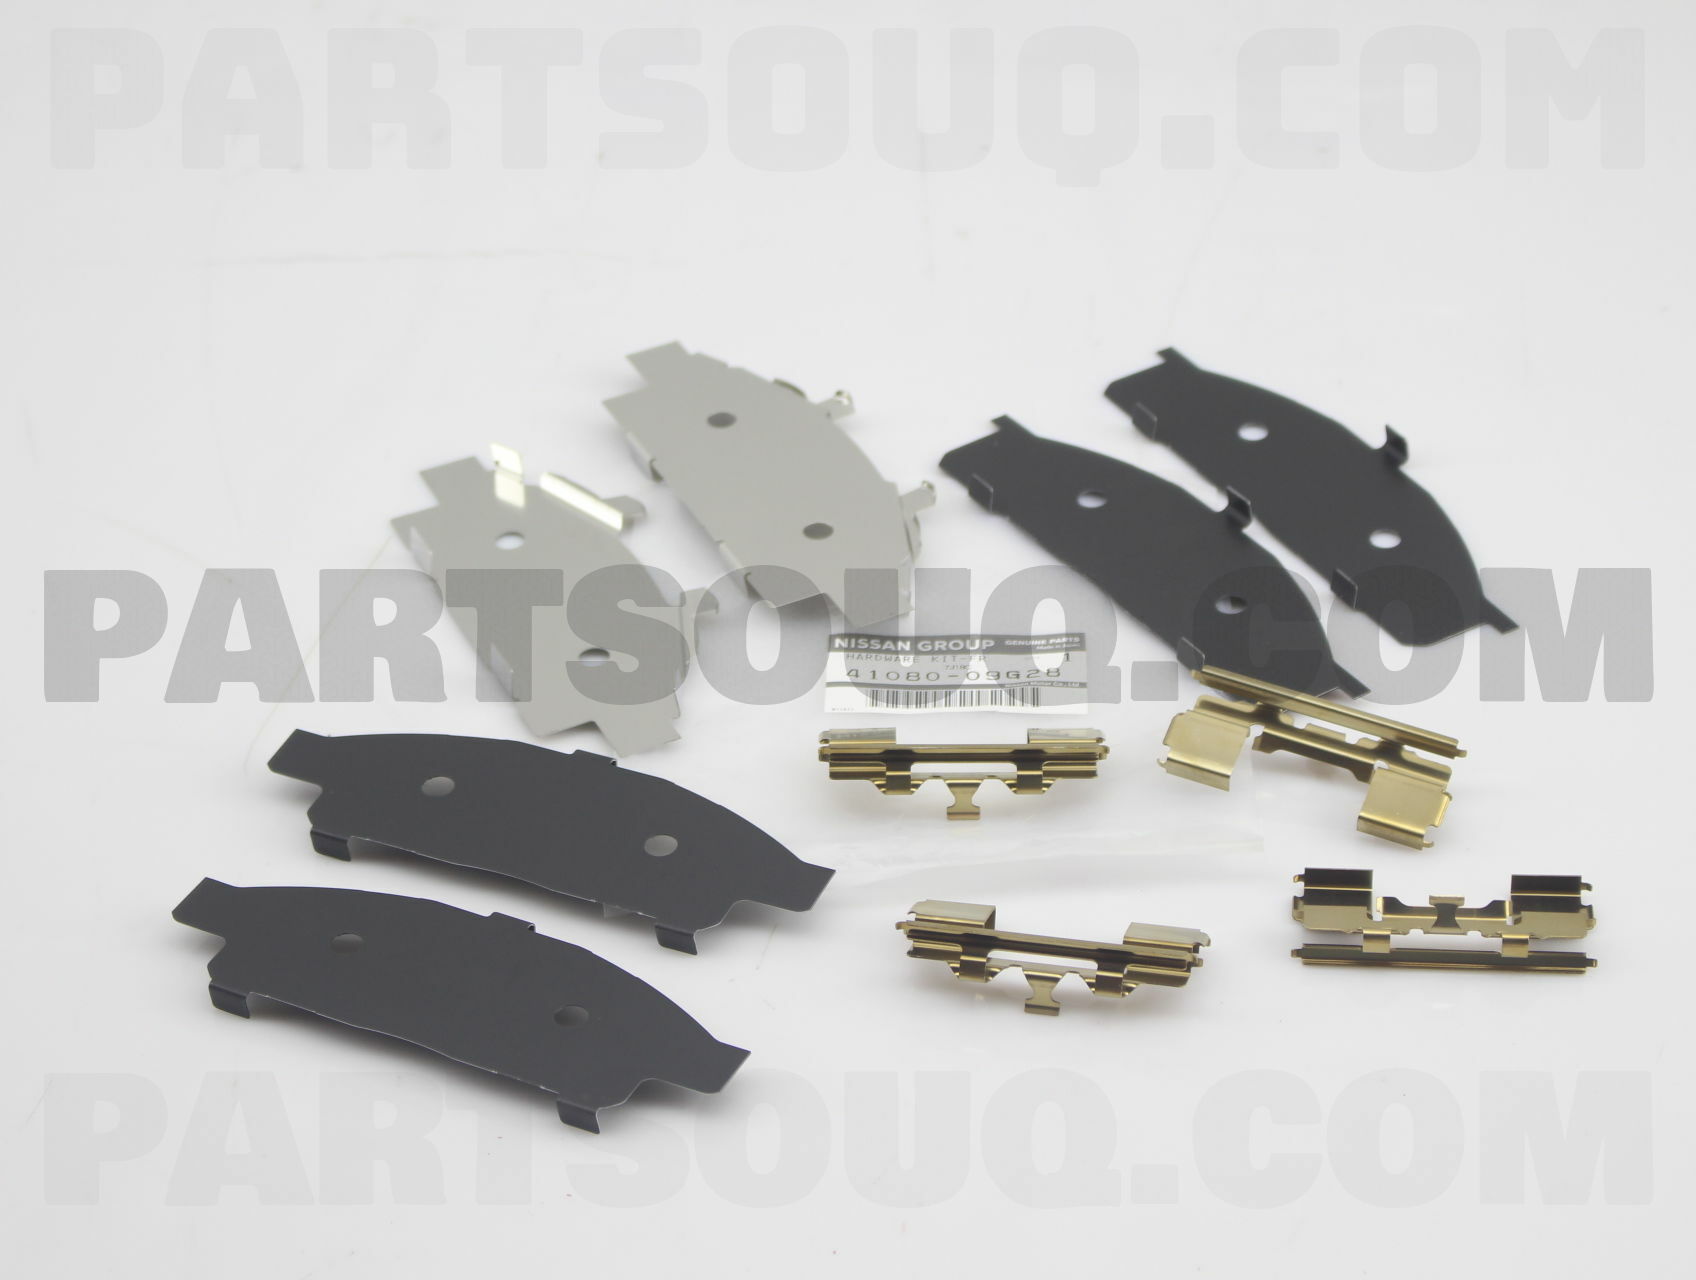 HARDWARE KIT-FRONT DISC BRAKE PAD 4108009G28 | Nissan Parts | PartSouq